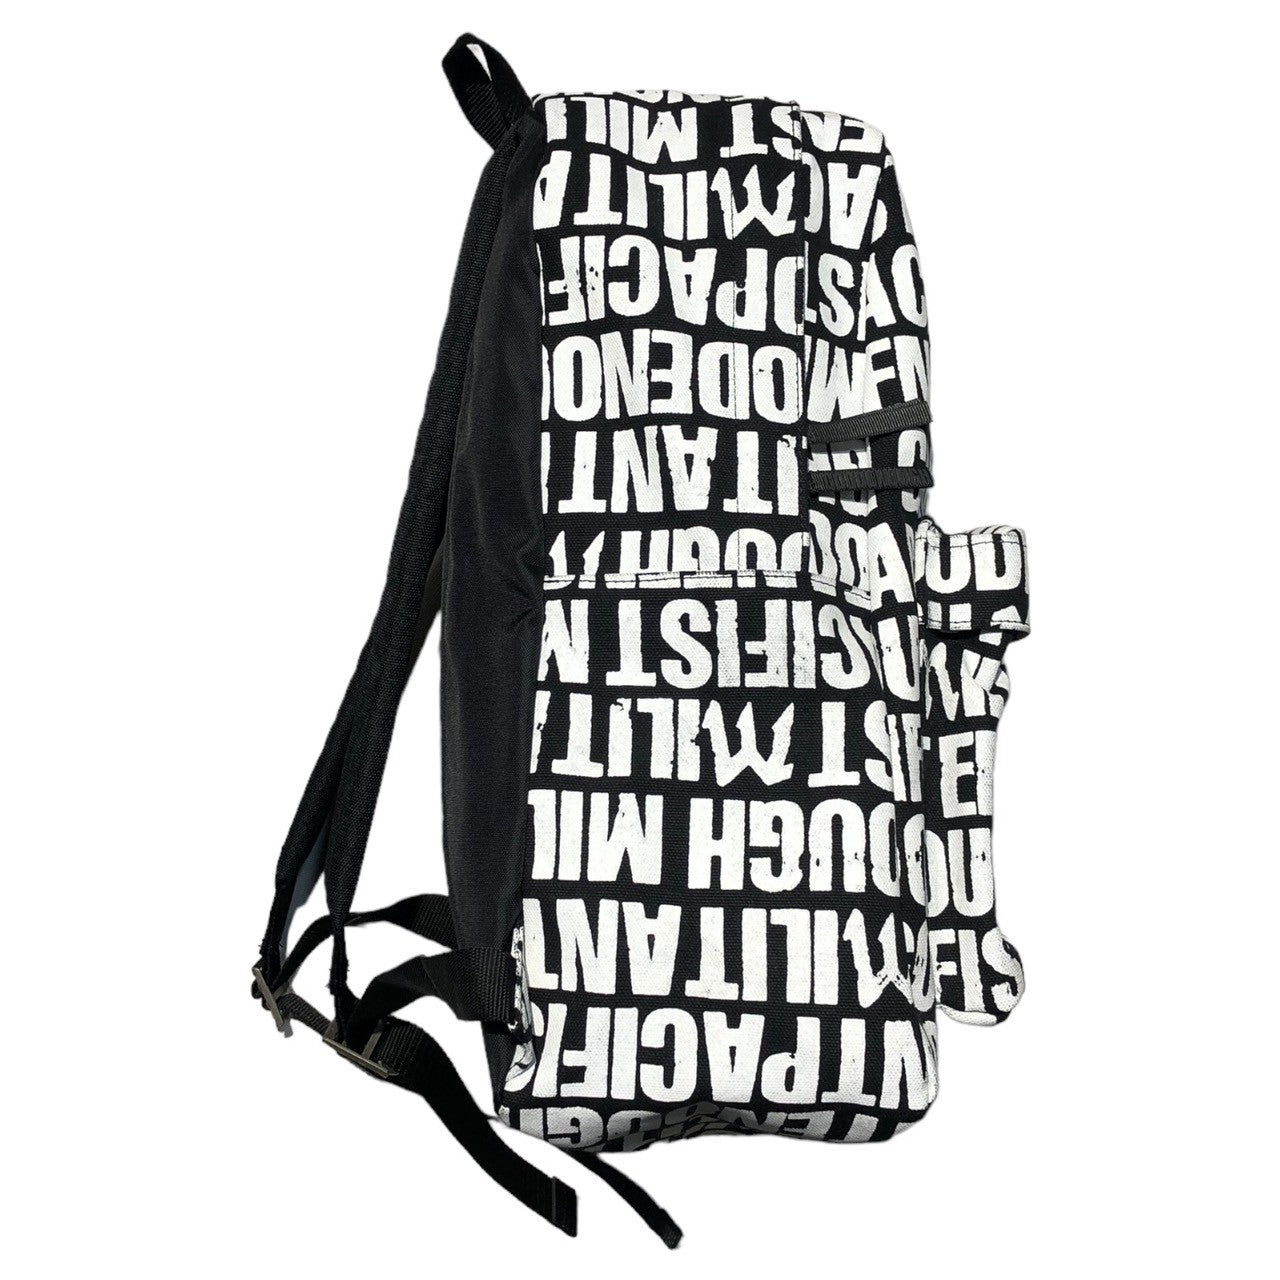 GOODENOUGH × militant pacifist × FABRICK(グッドイナフ×ミリタントパシフィスト×ファブリック) all over logo backpack ロゴ リュック バックパック ブラック×ホワイト